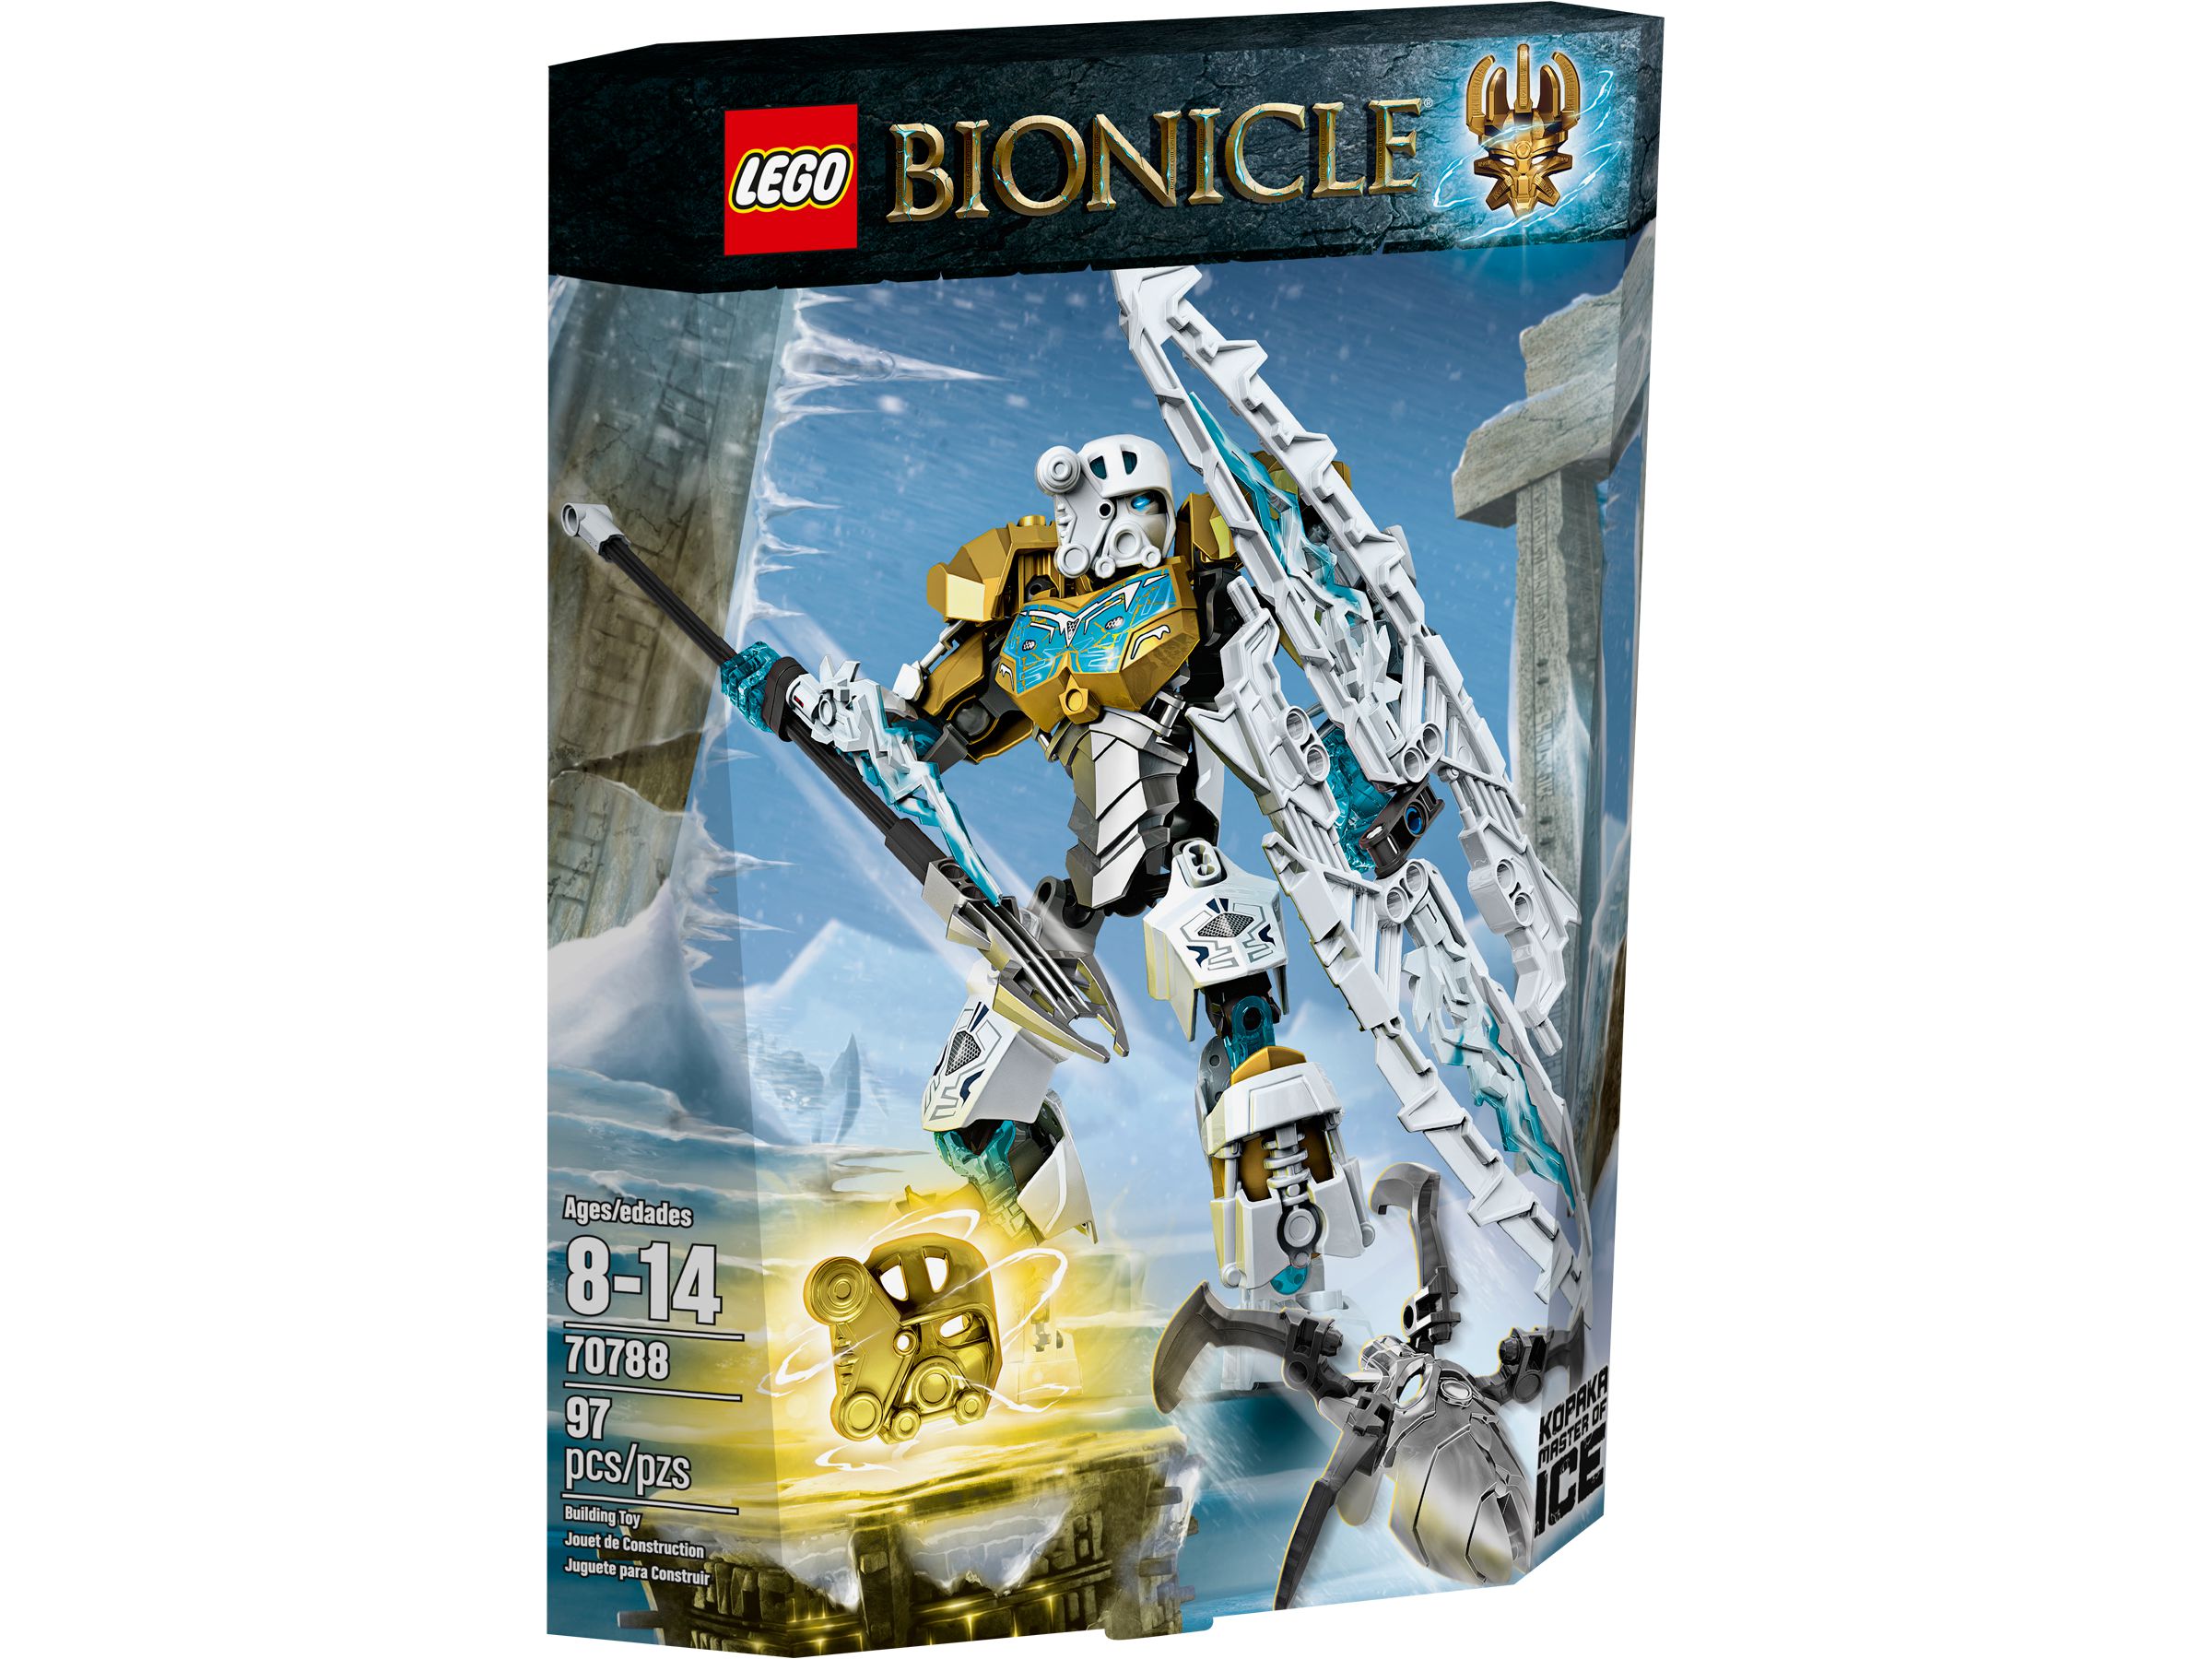 LEGO Bionicle 70788 Kopaka – Meister des Eises LEGO_70788_alt1.jpg